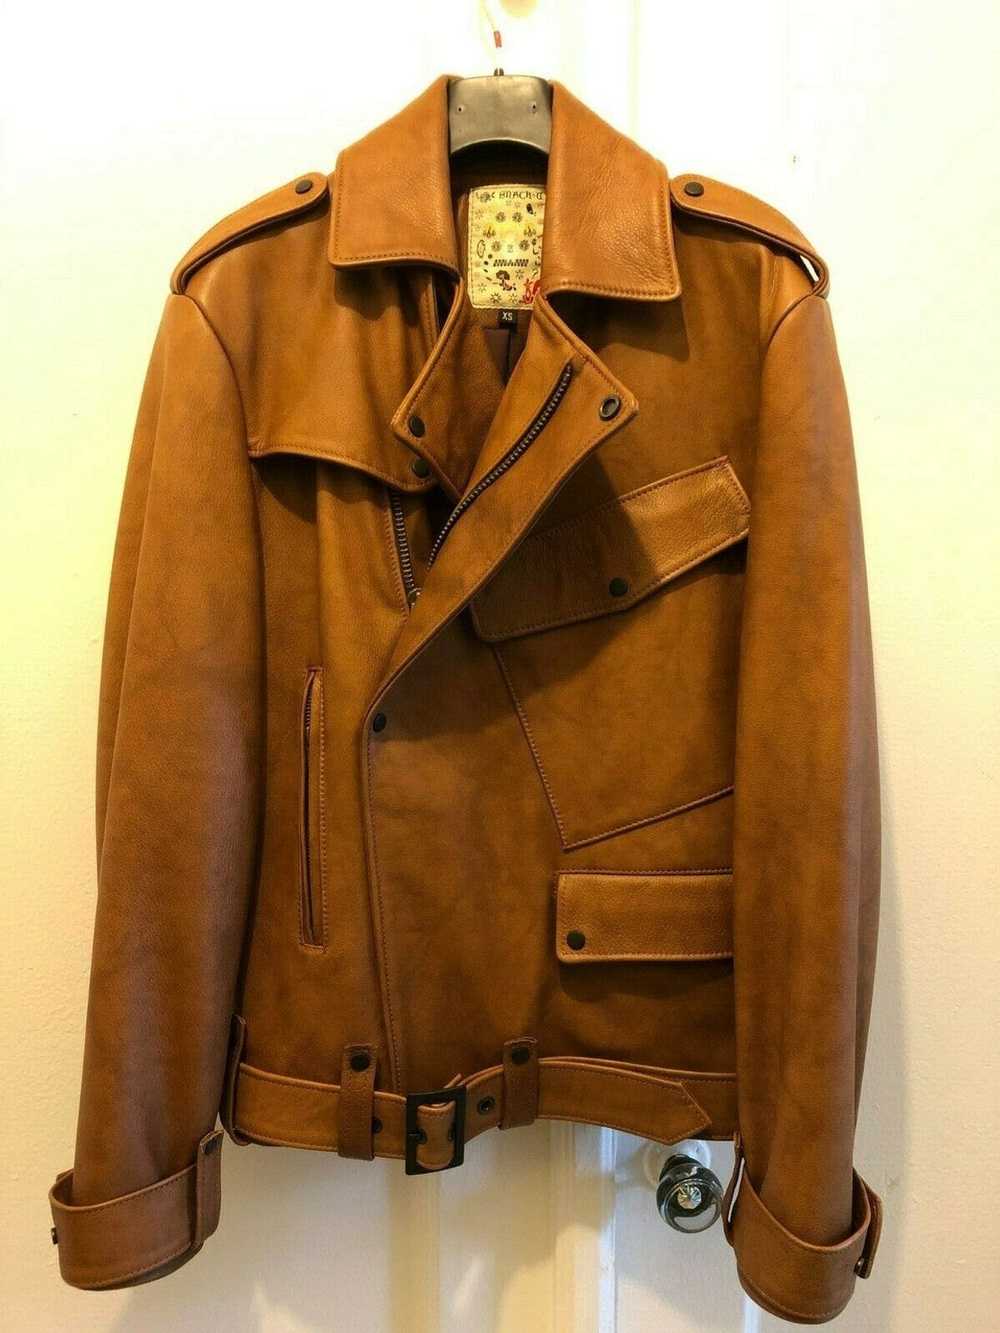 Sack's designer brown leather jacket by snacku - image 1